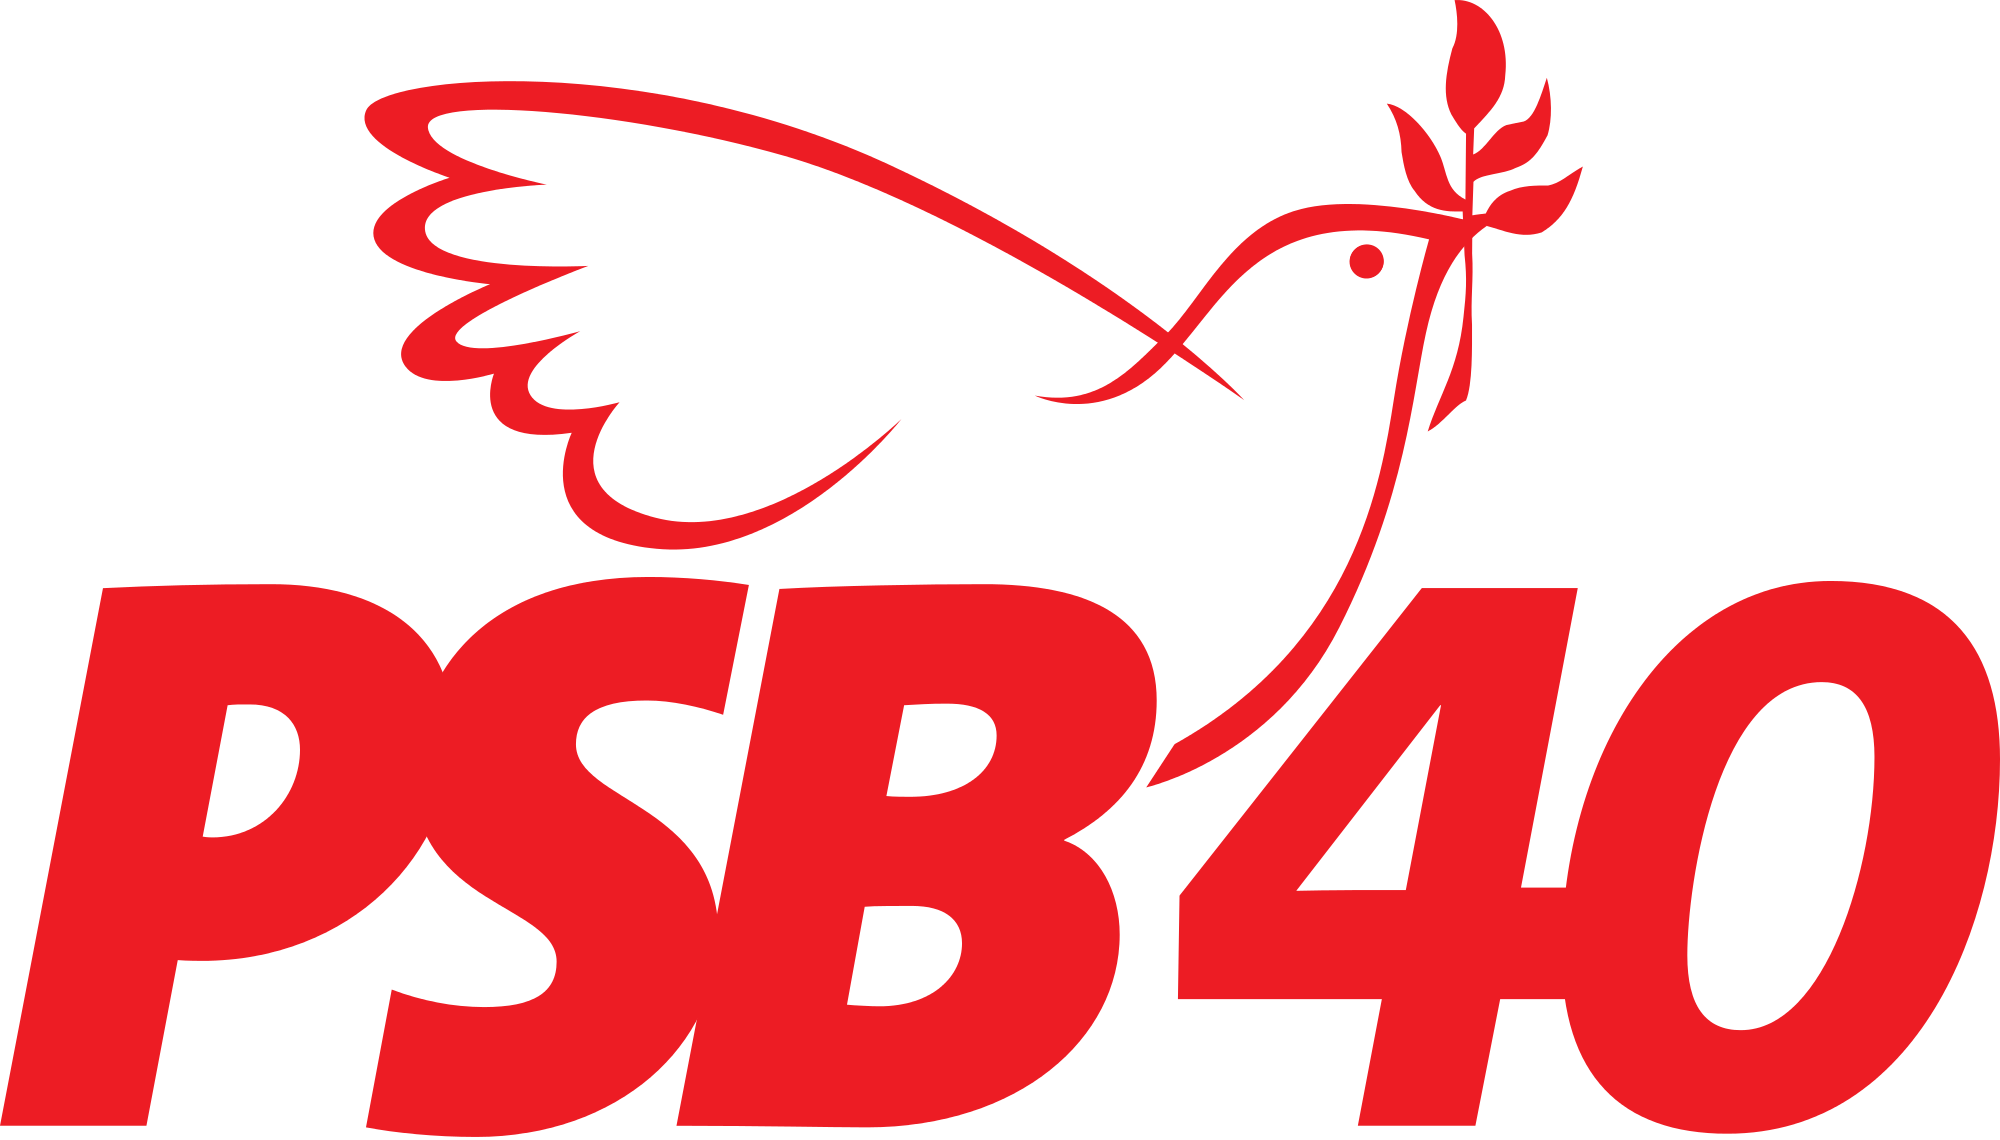 PSB Logo.